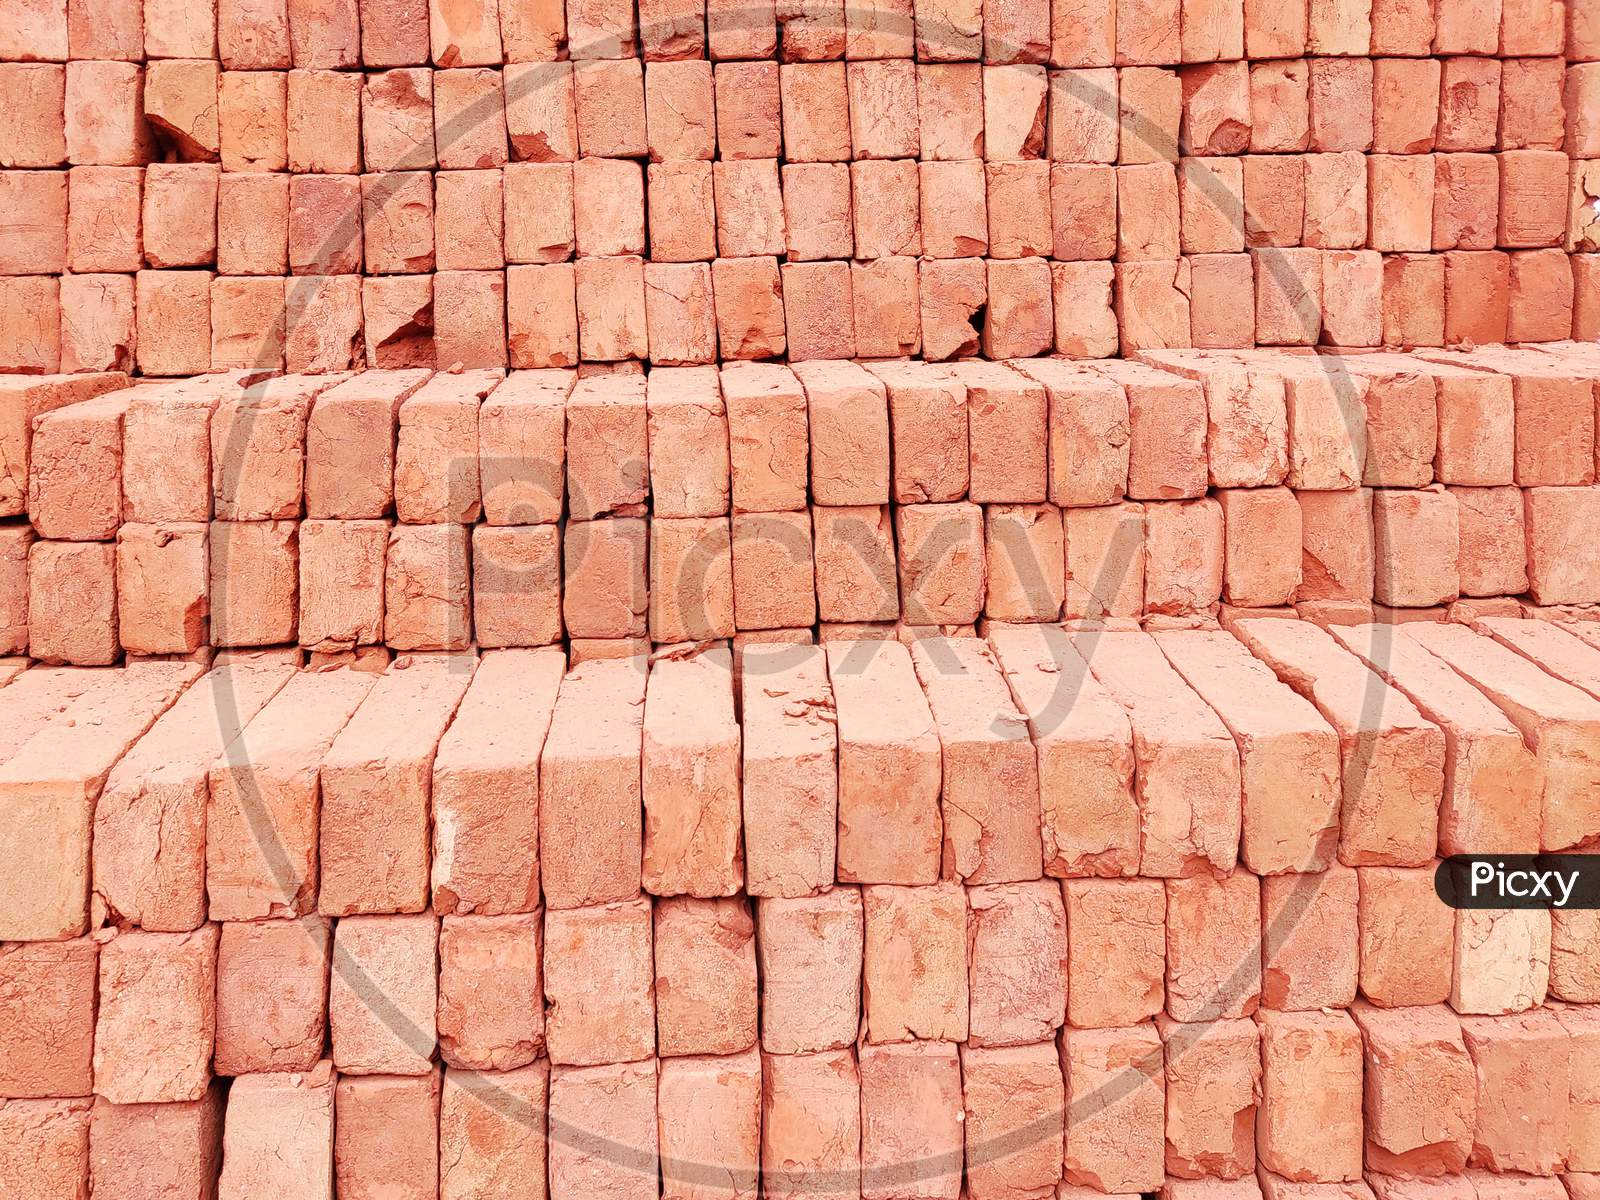 Bricks Arranged In Row For House Construction